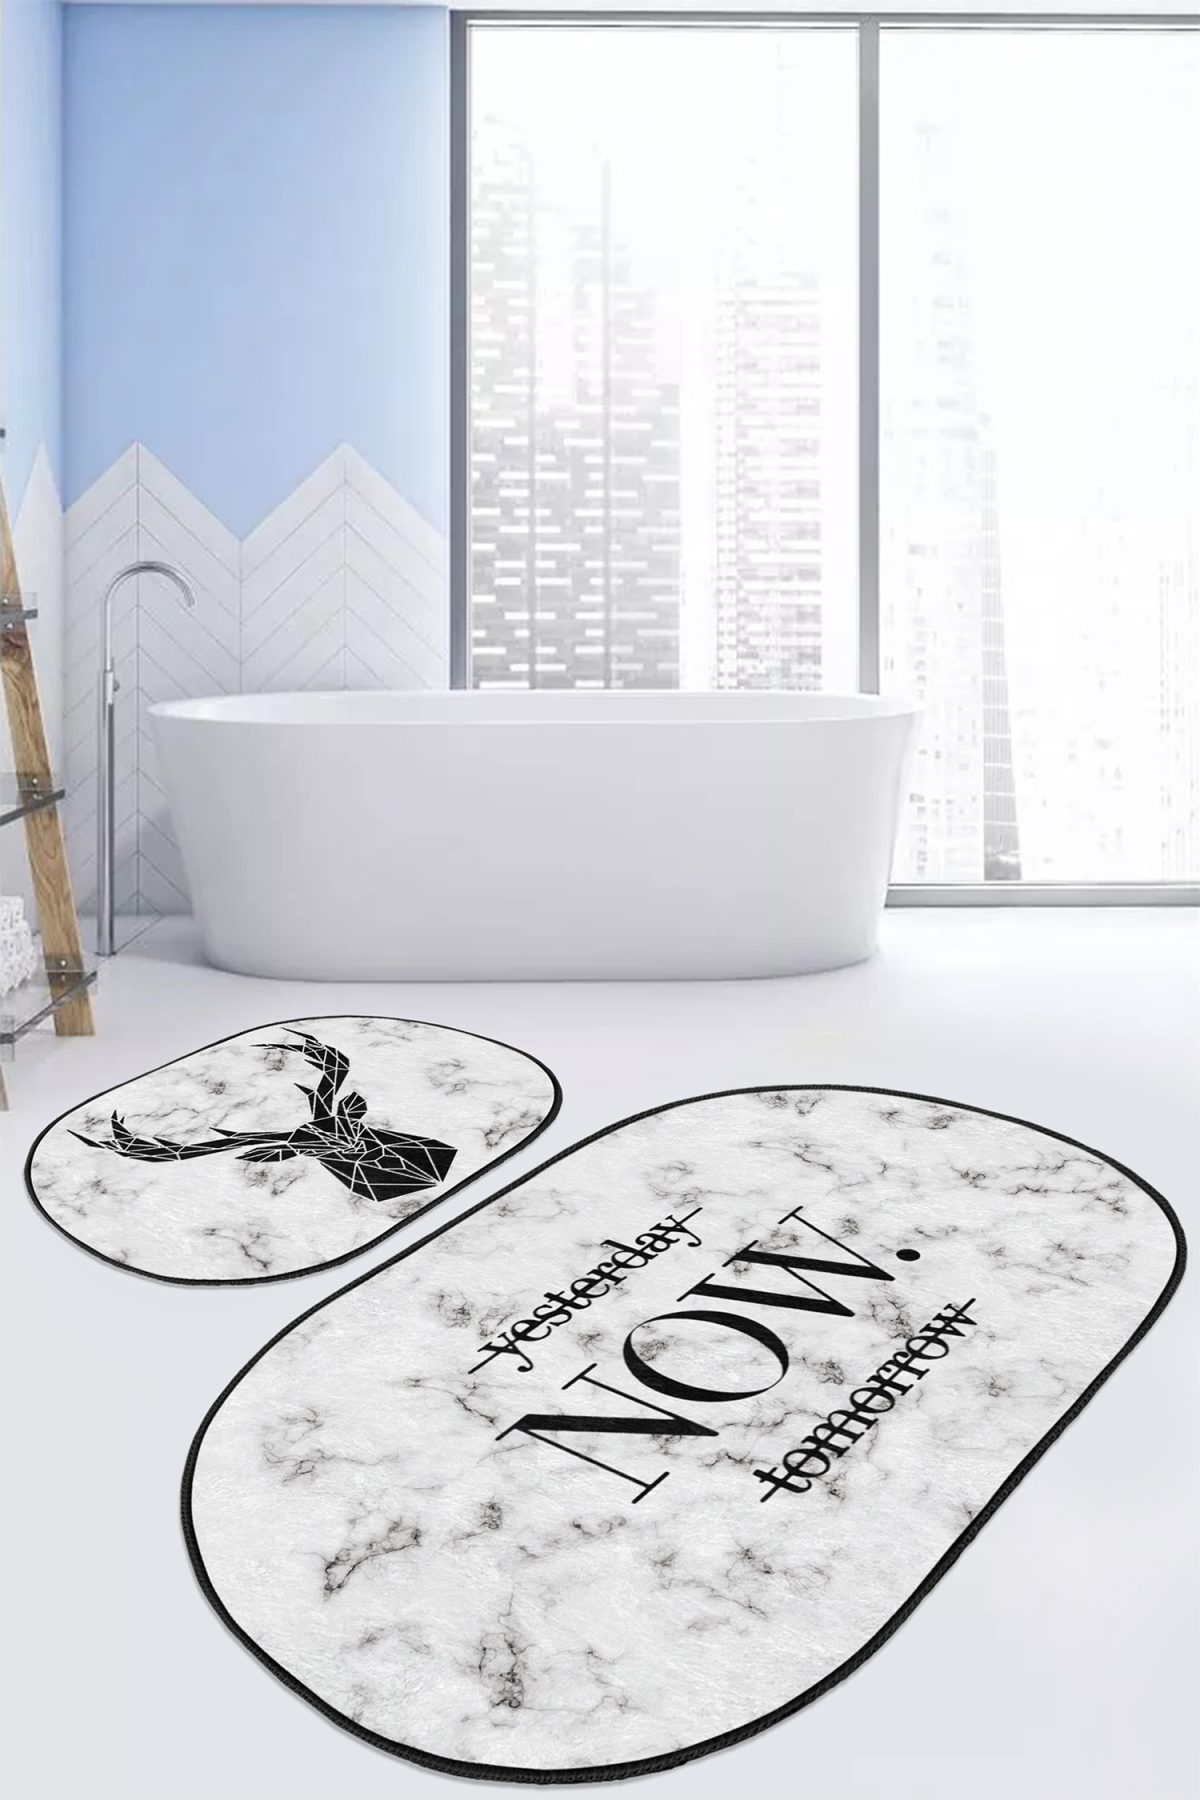 Mermer Zemin Geyik Y.N.T. Tasarımlı 2'li Oval Kaymaz Tabanlı Banyo & Mutfak Paspas Takımı Realhomes